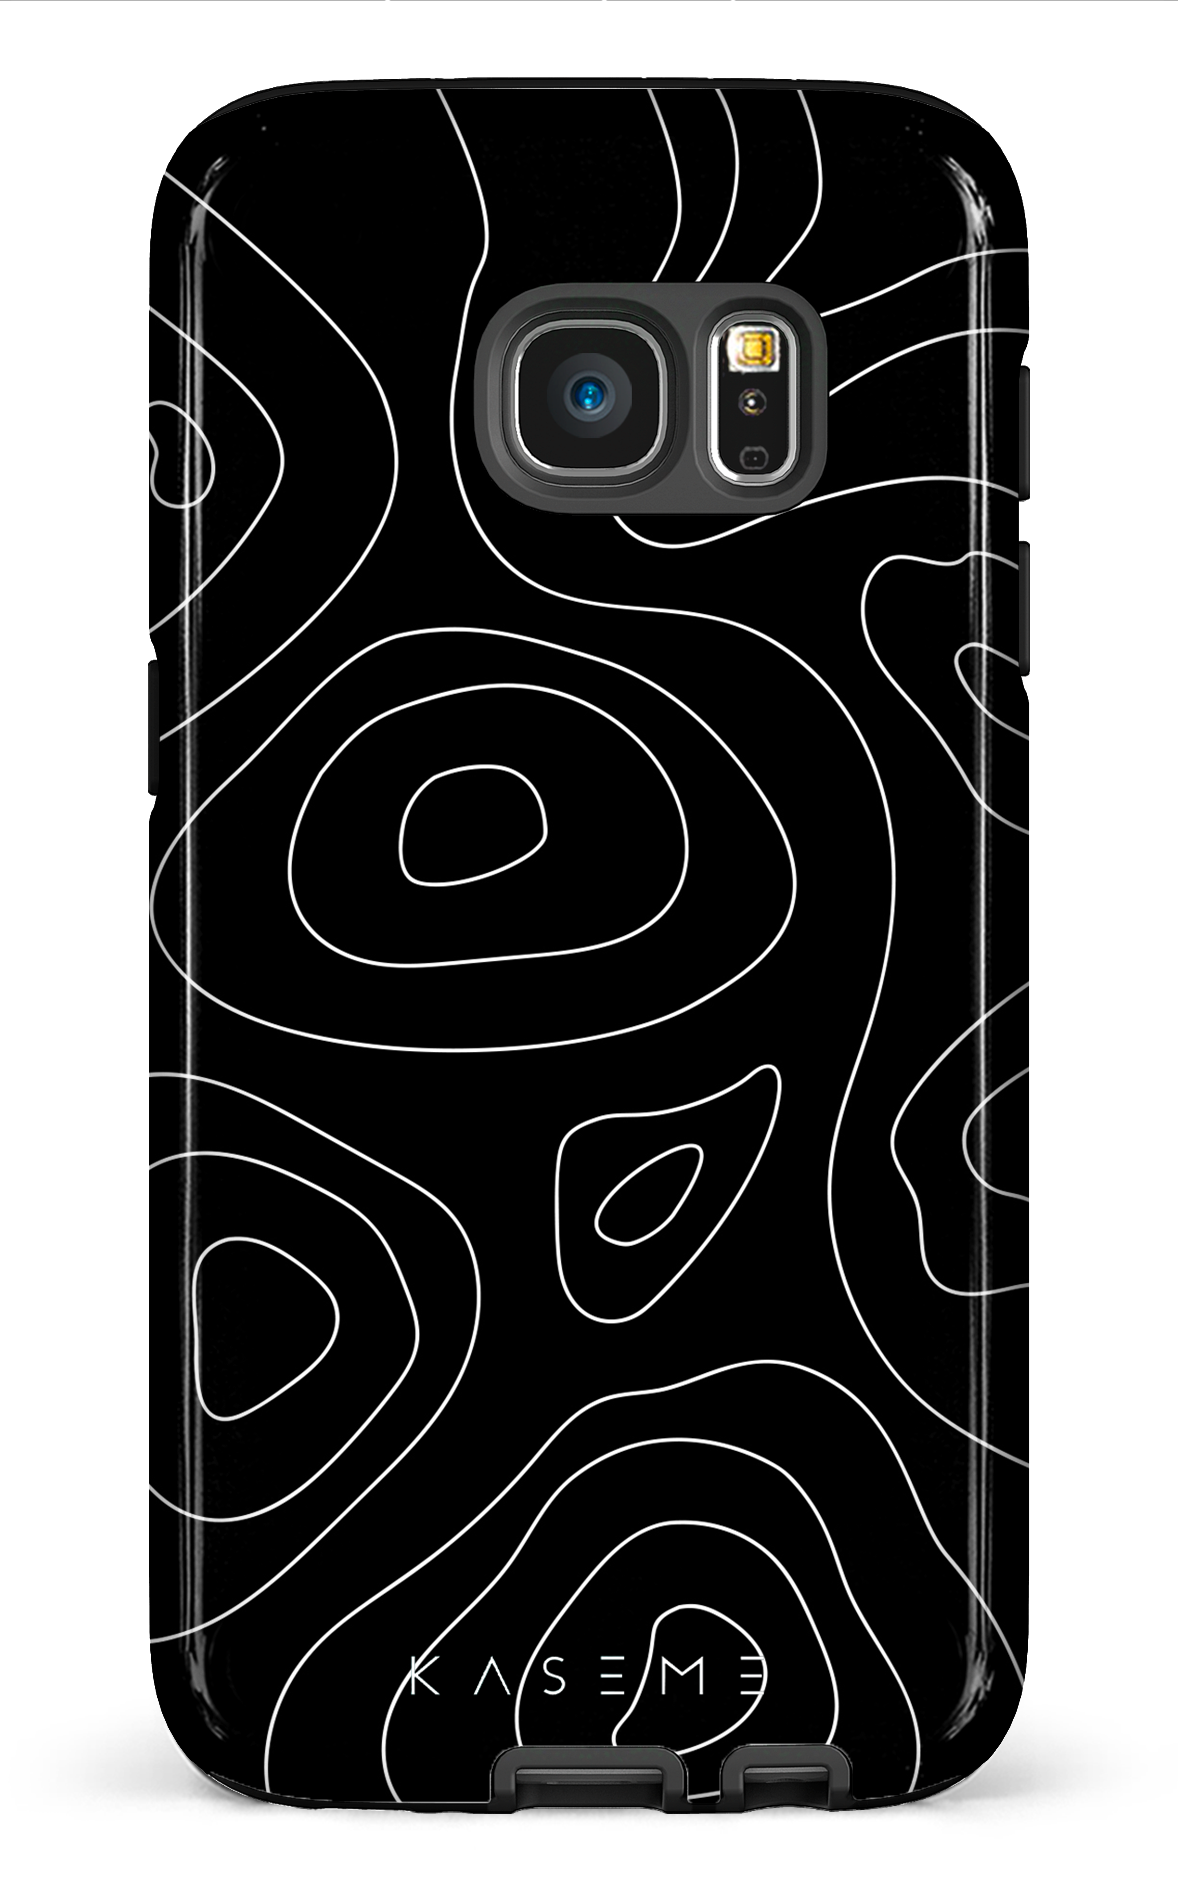 Enigma - Galaxy S7